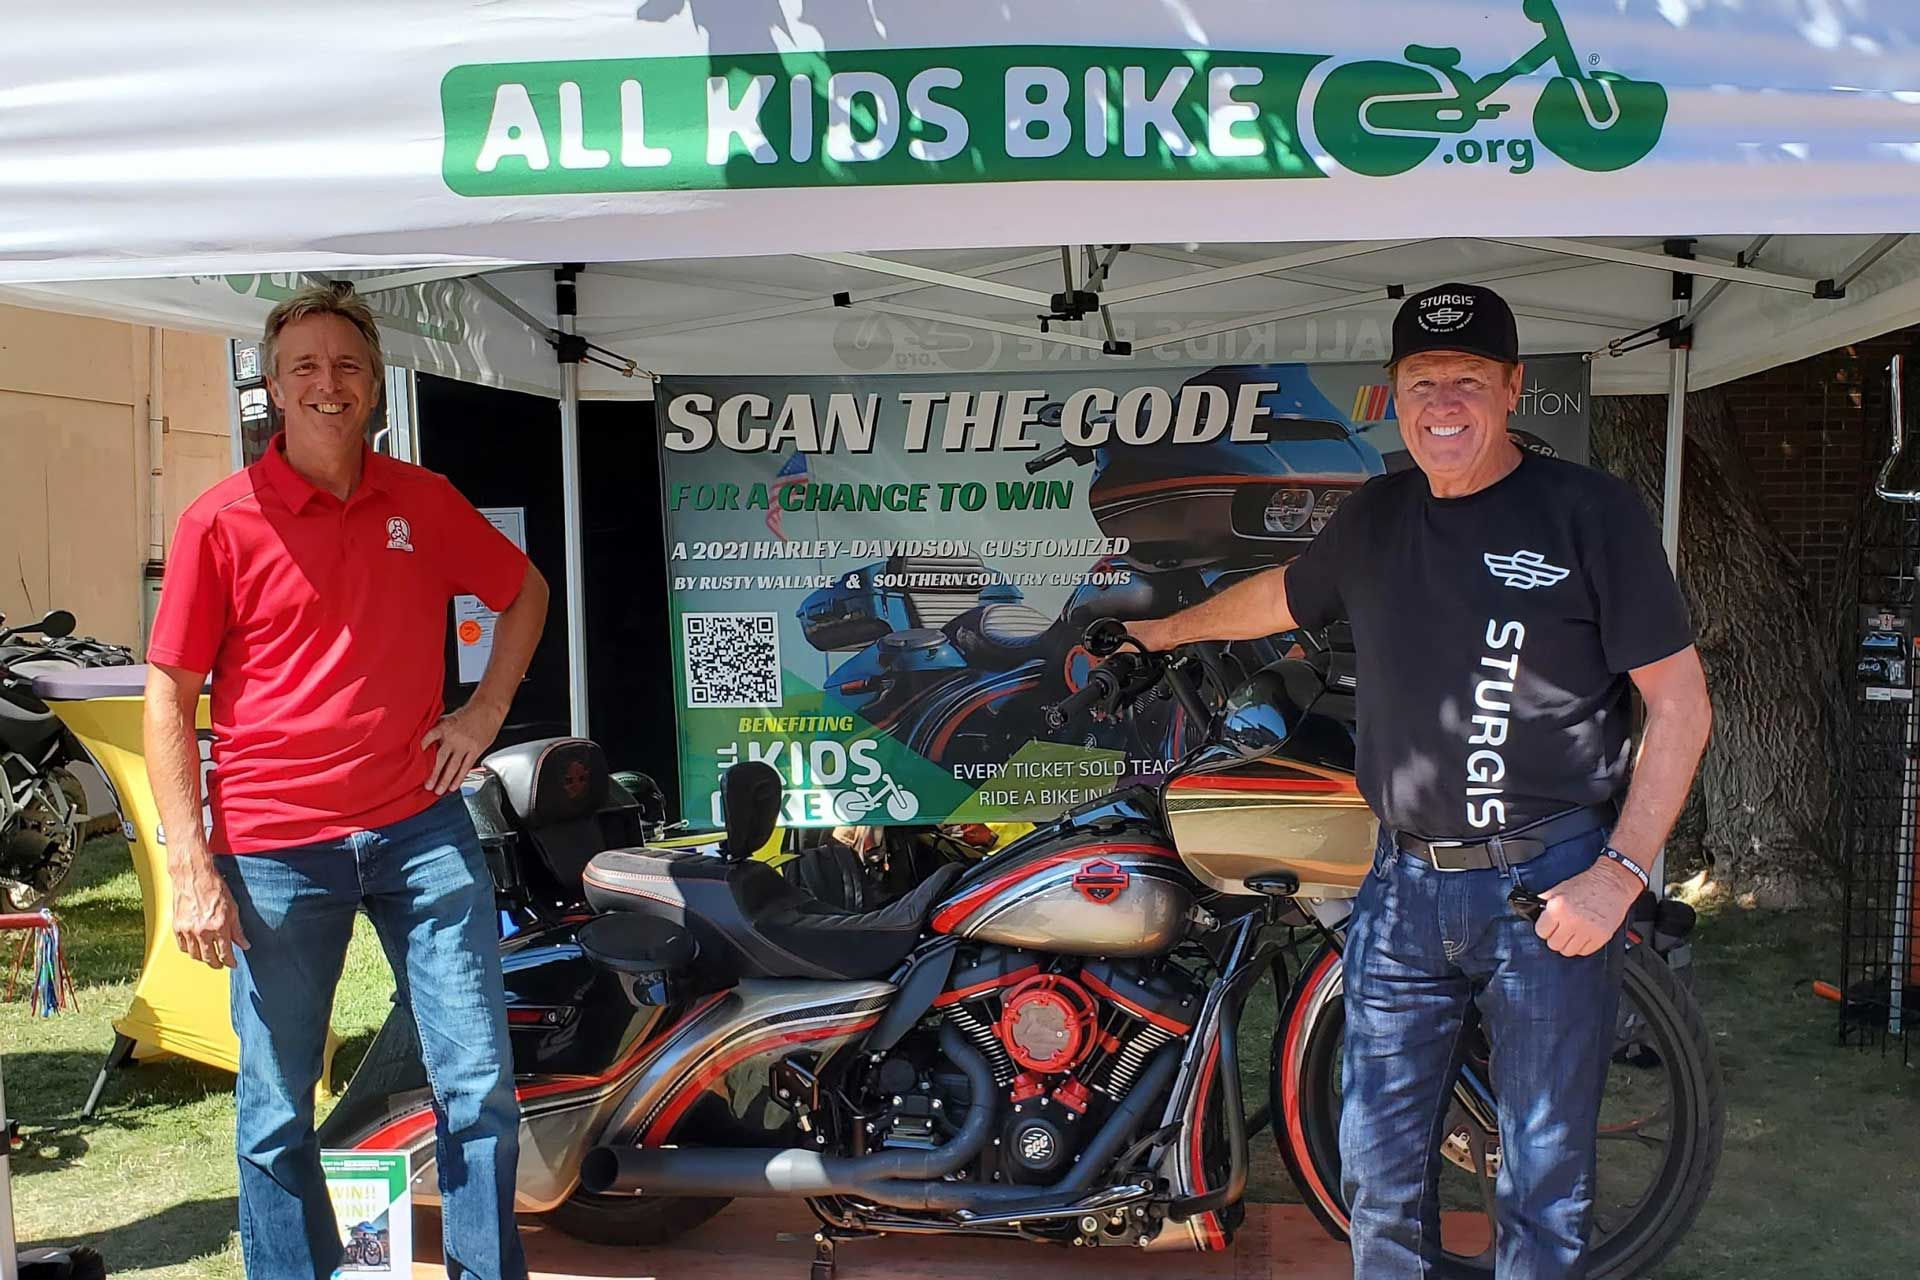 Ryan McFarland and Rusty Wallace pose with a custom Harley Davidson